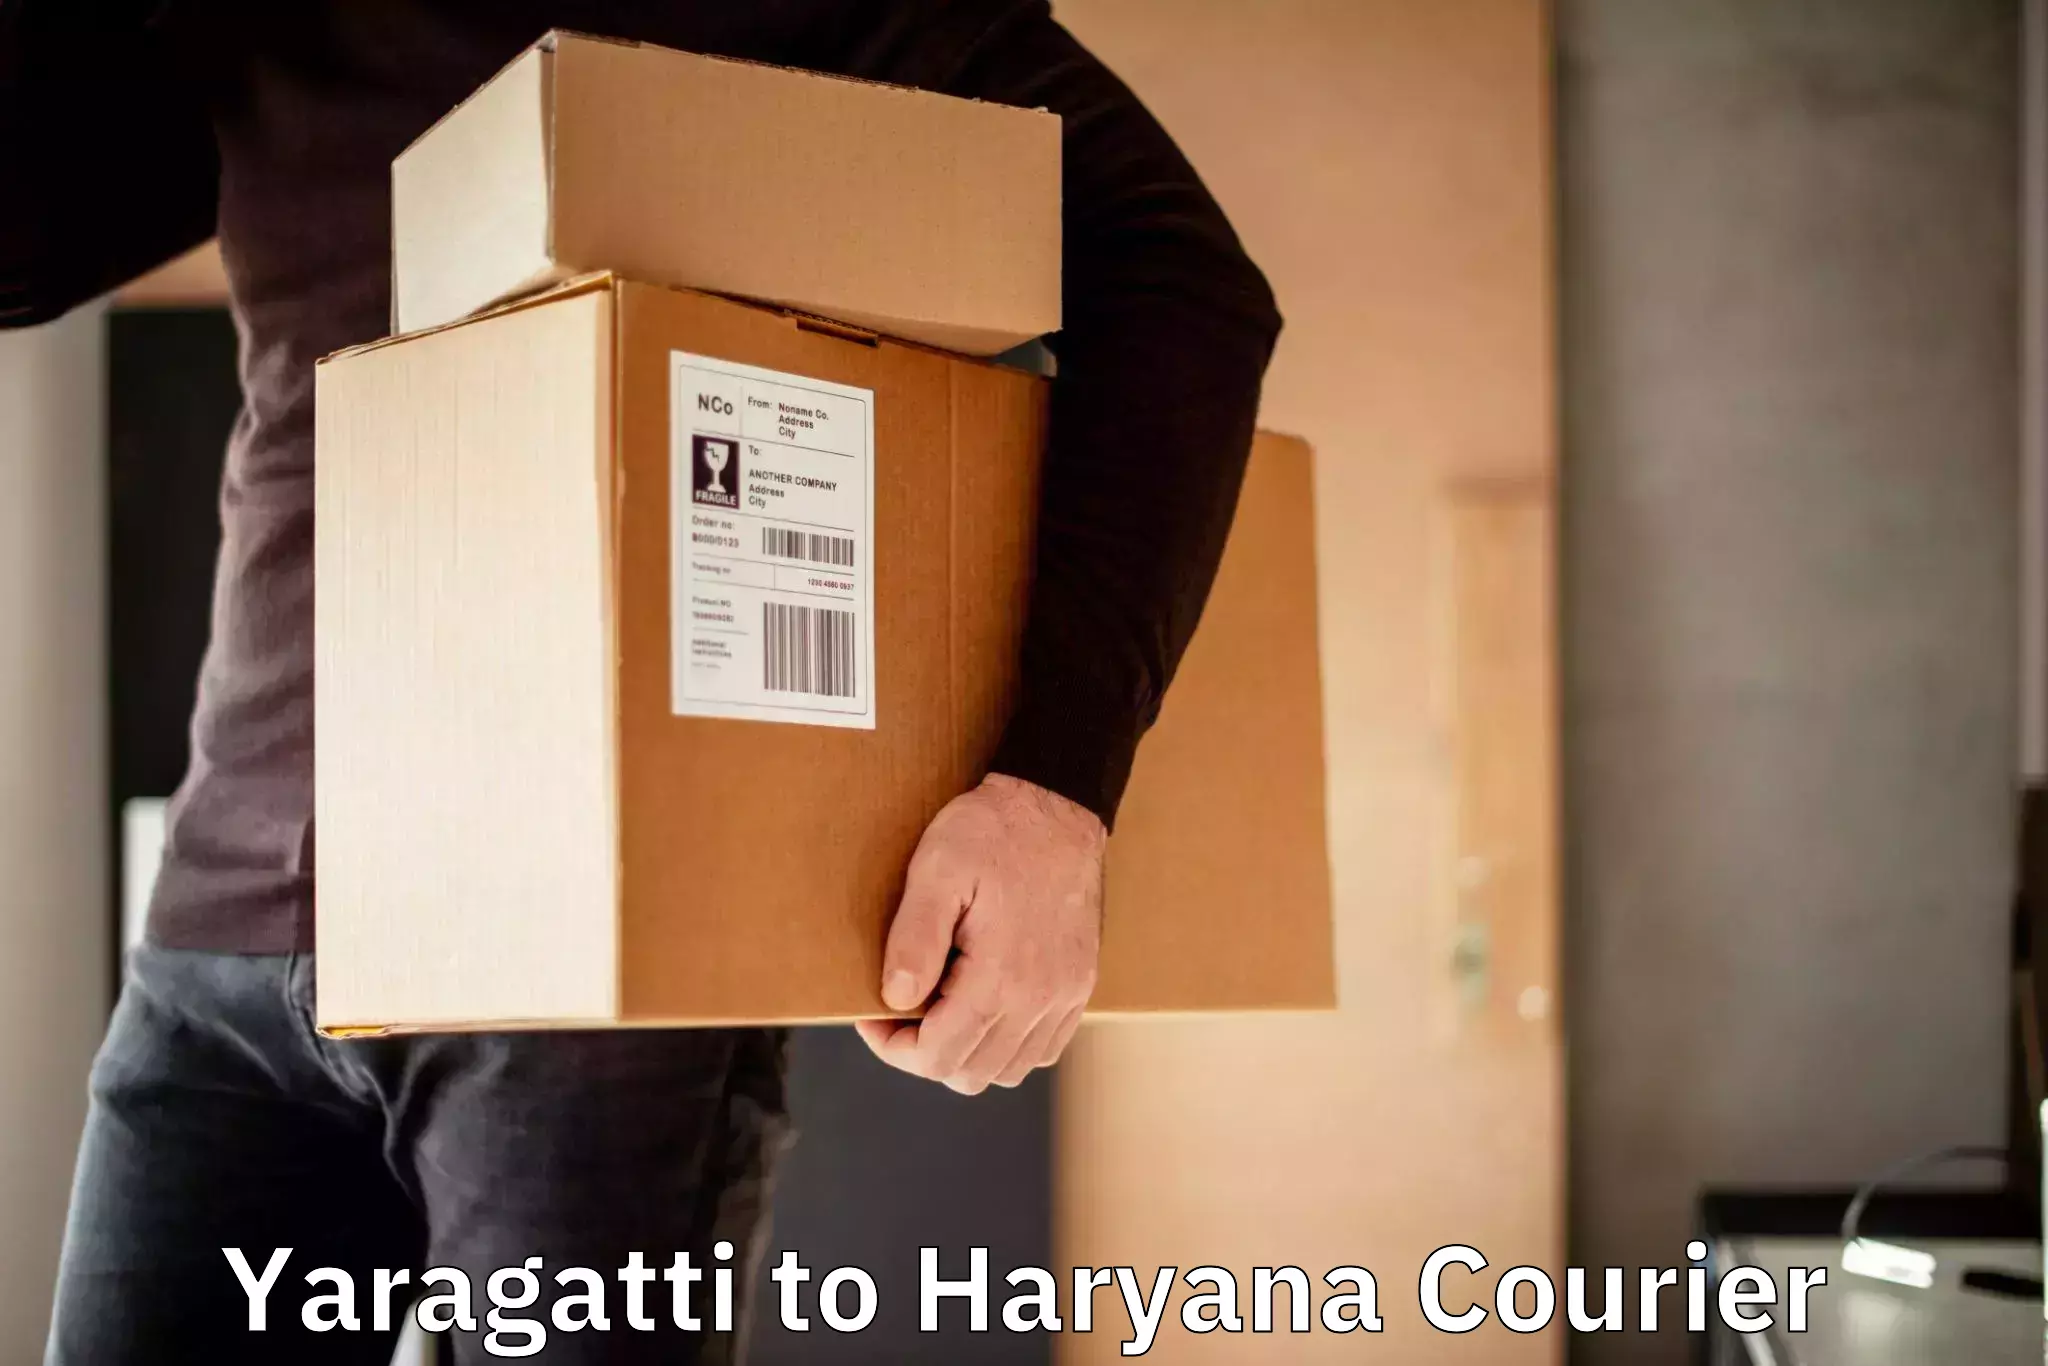 Customized shipping options Yaragatti to NCR Haryana